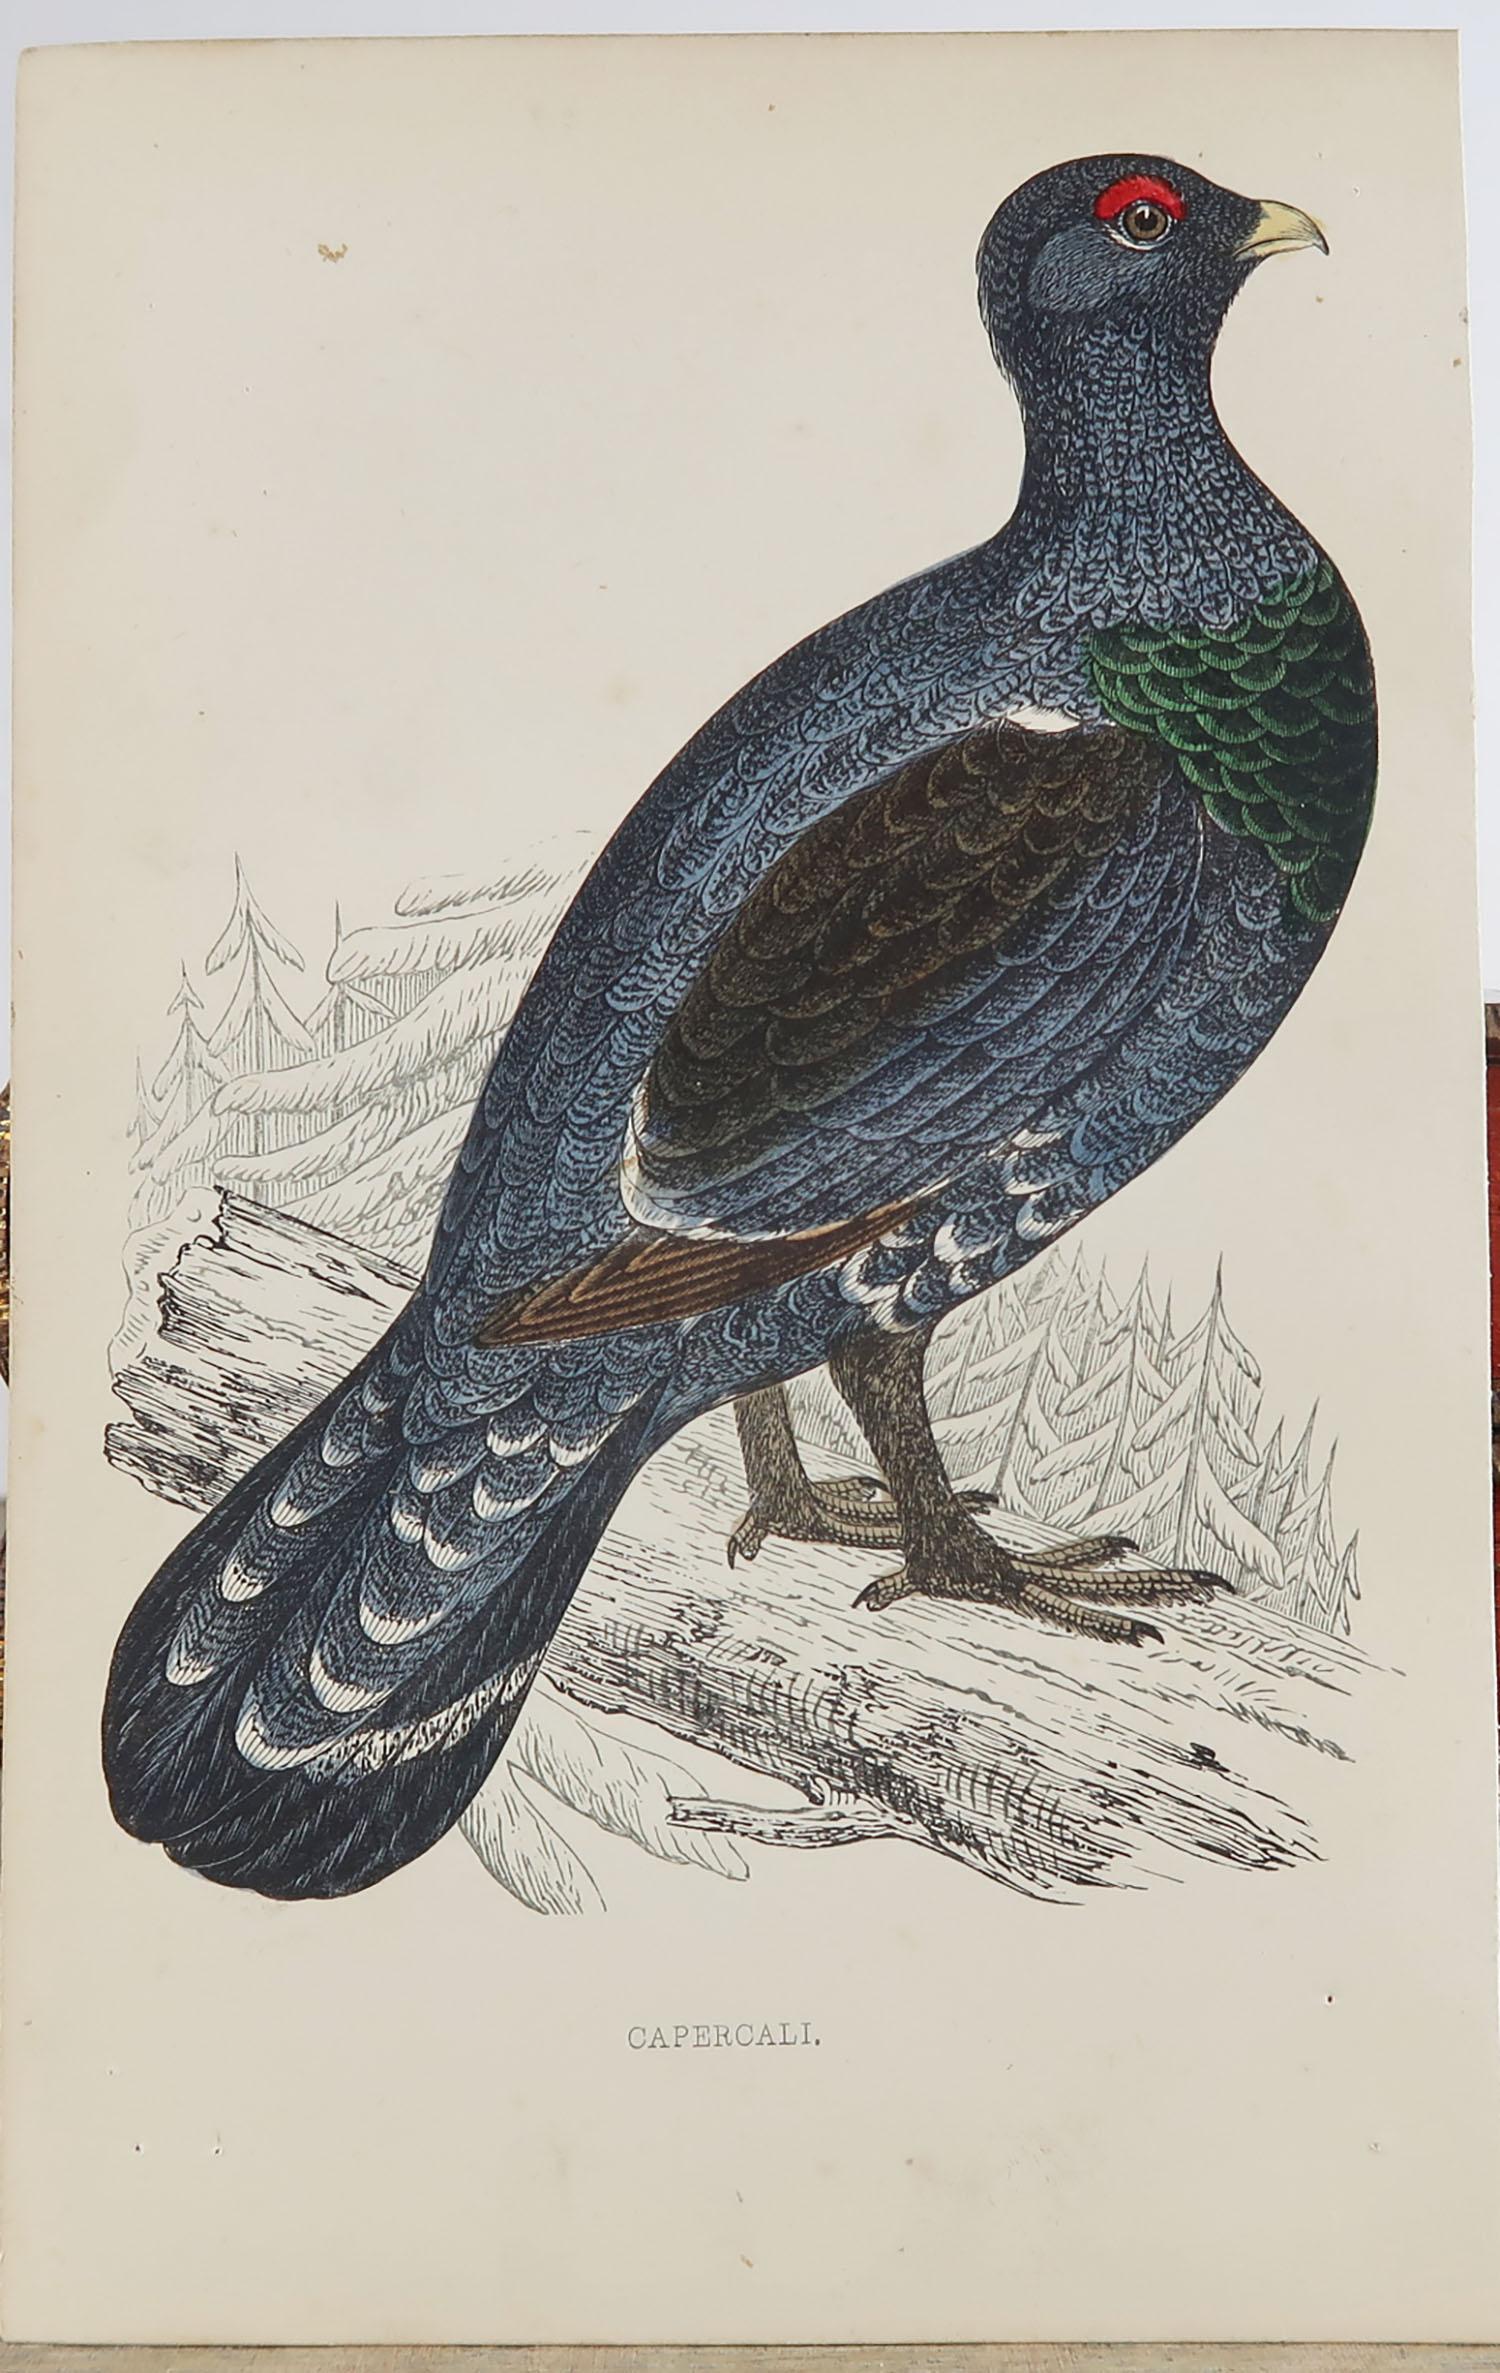 Folk Art Original Antique Bird Print, the Capercaillie, circa 1870